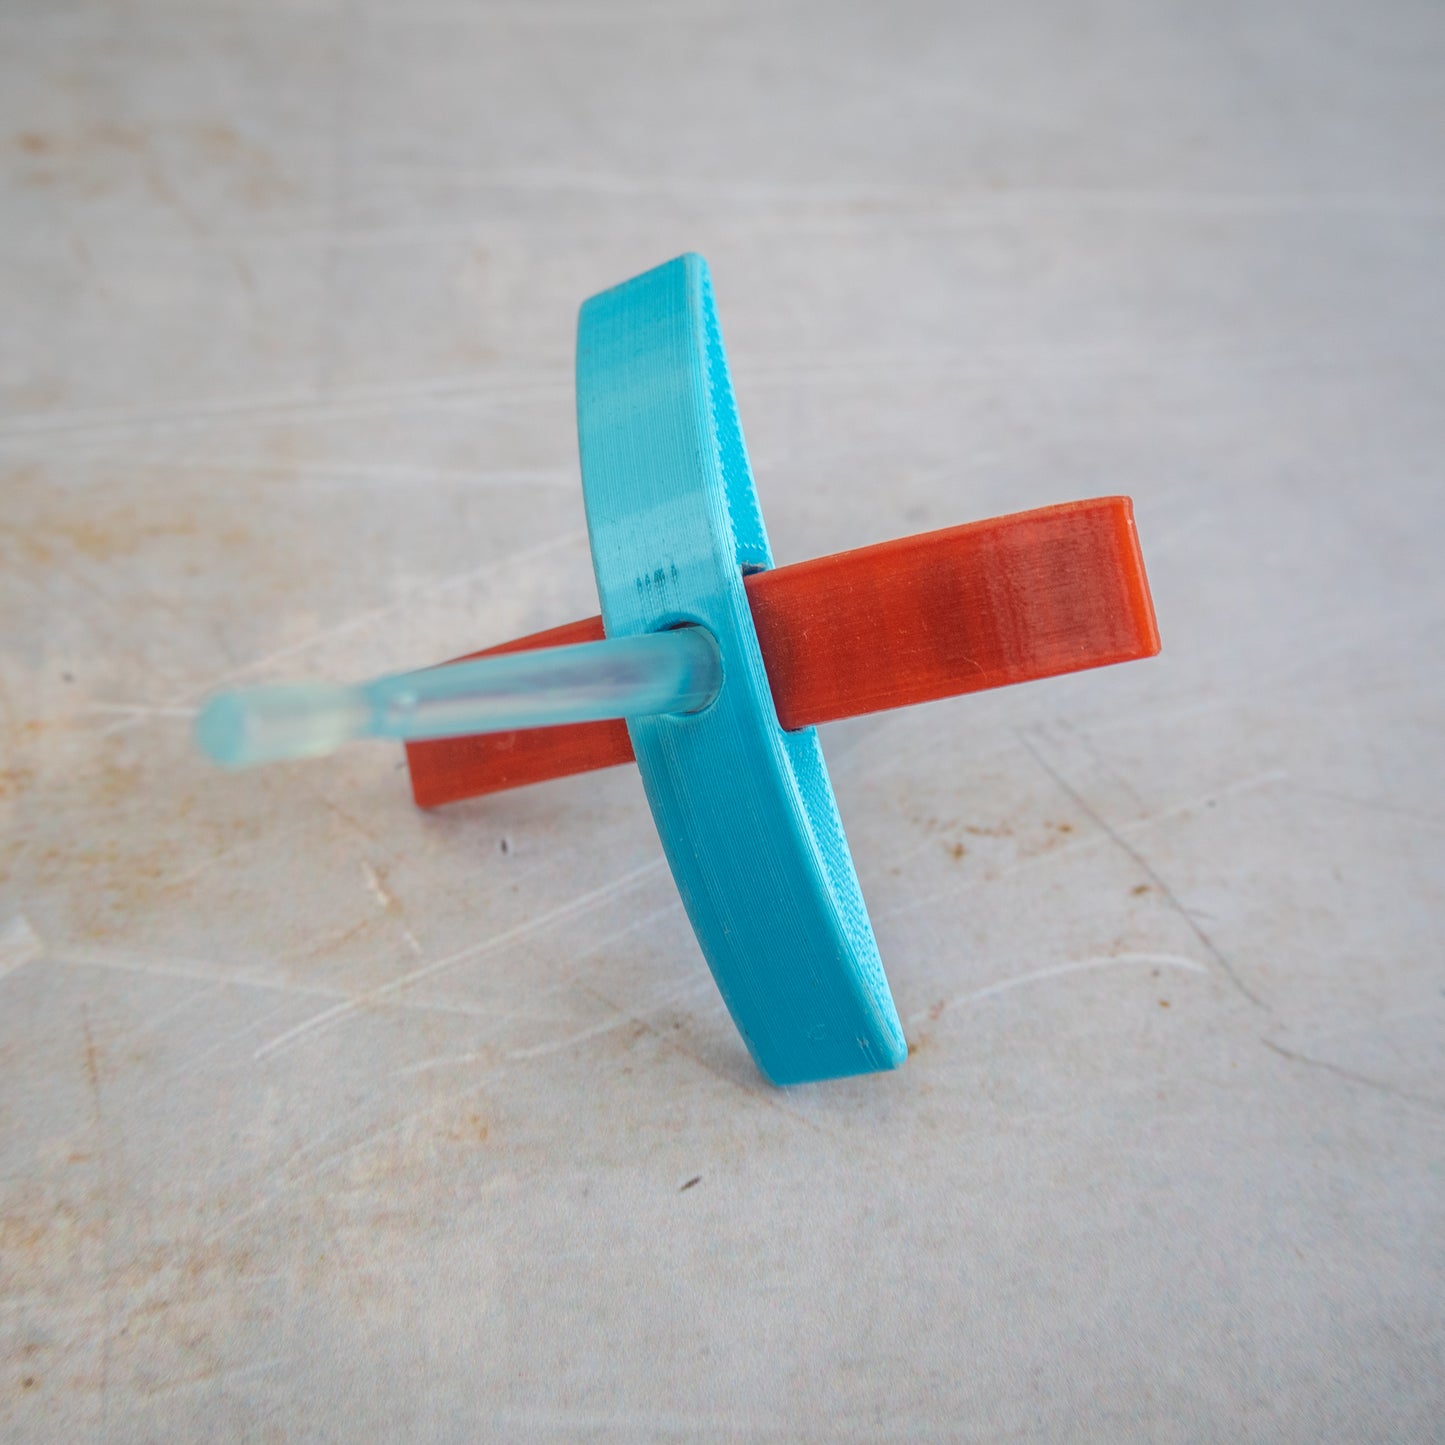 Micro 3D-Printed Turkish Spindles